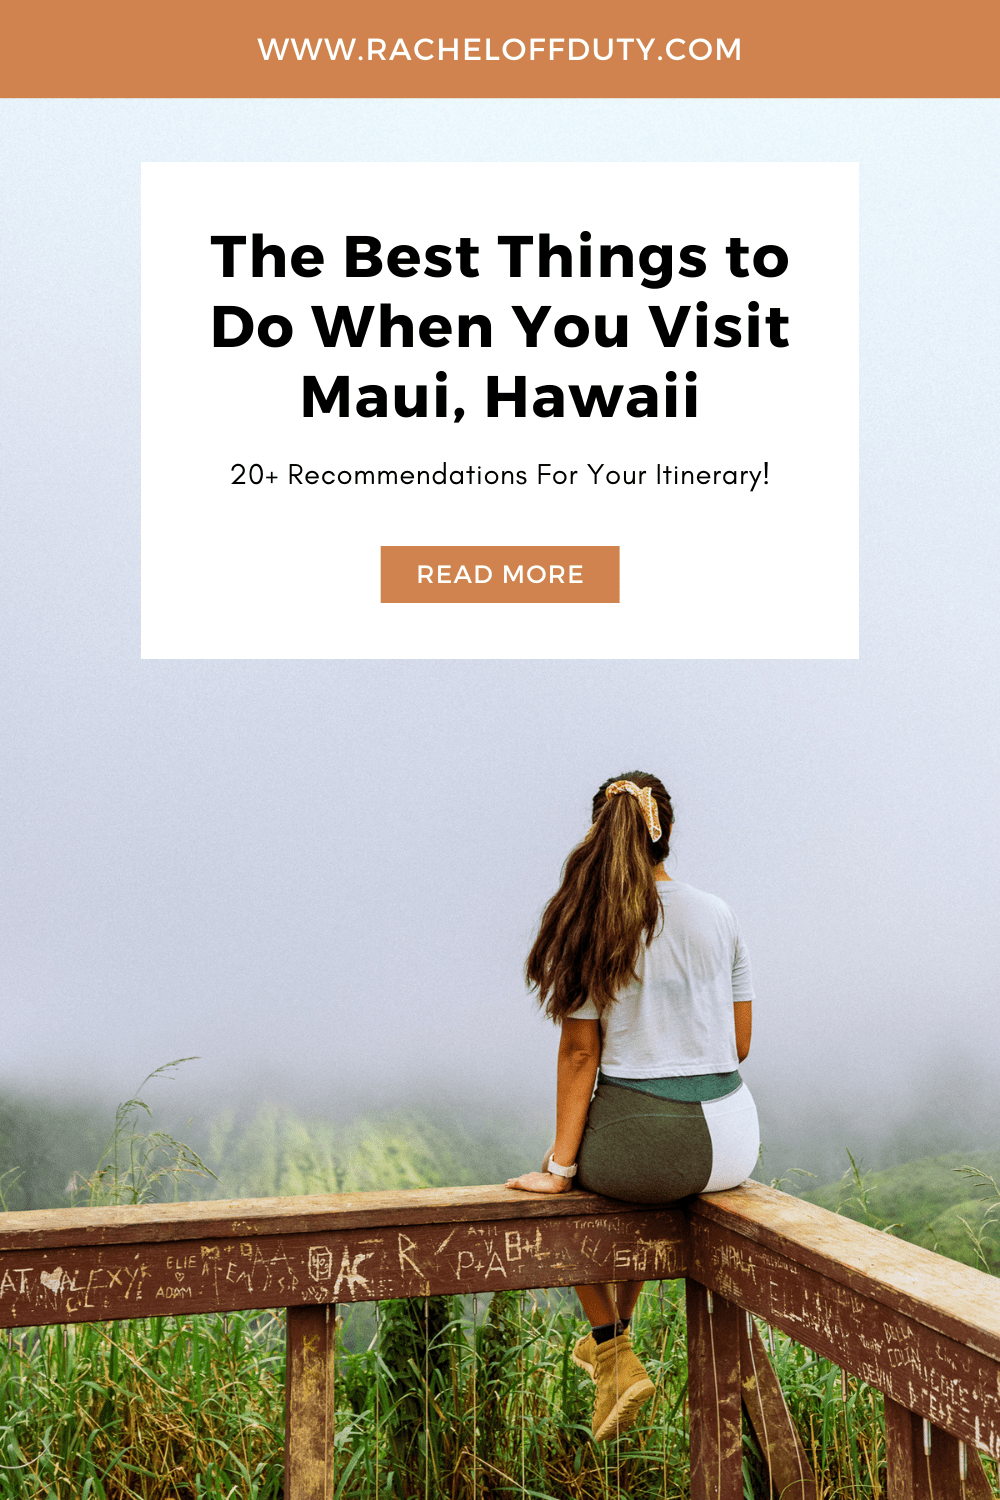 Things to Do on Maui - Rachel Off Duty